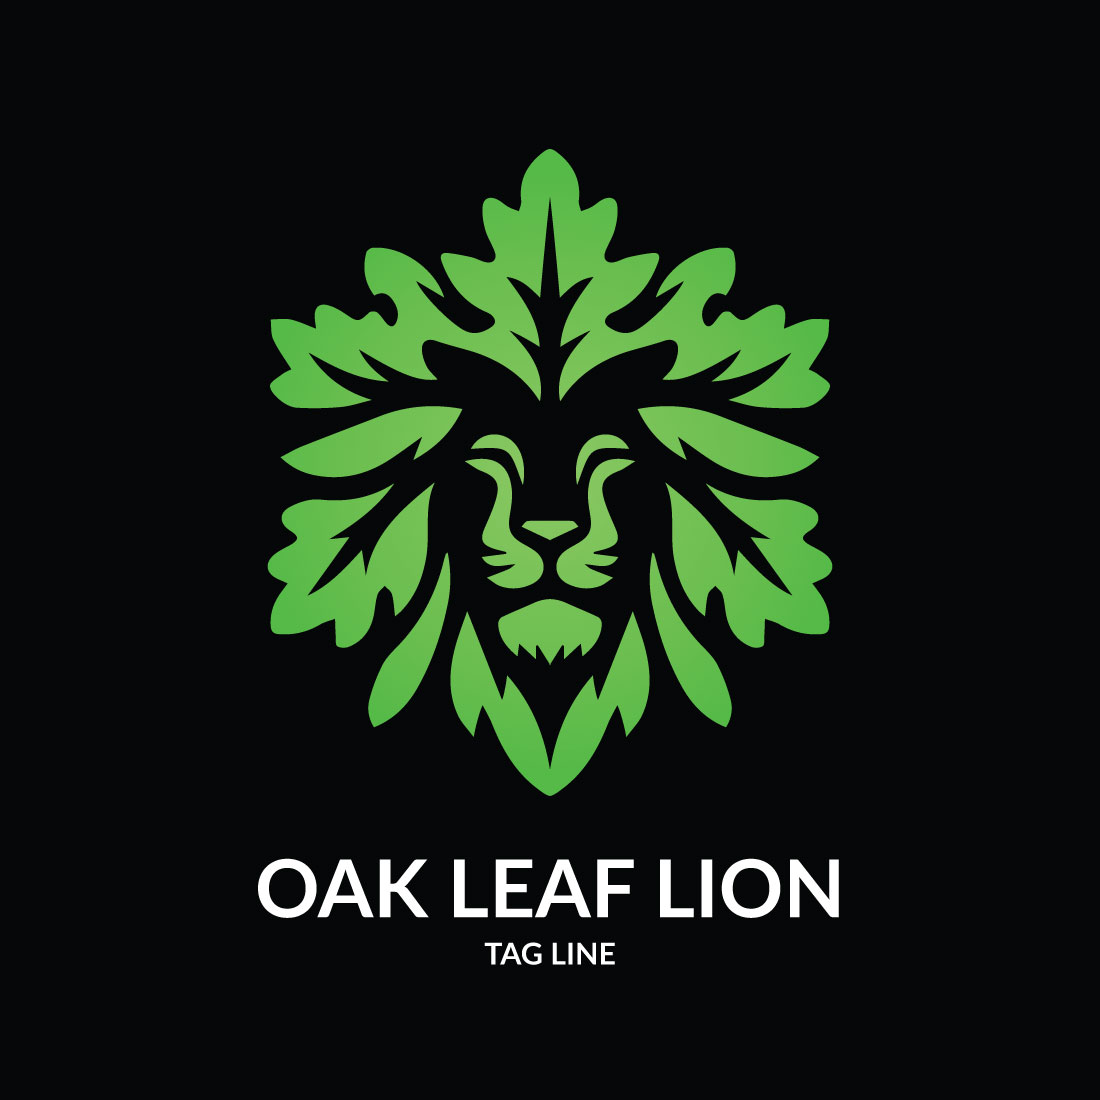 Oak Leaf Lion Logo Template preview image.